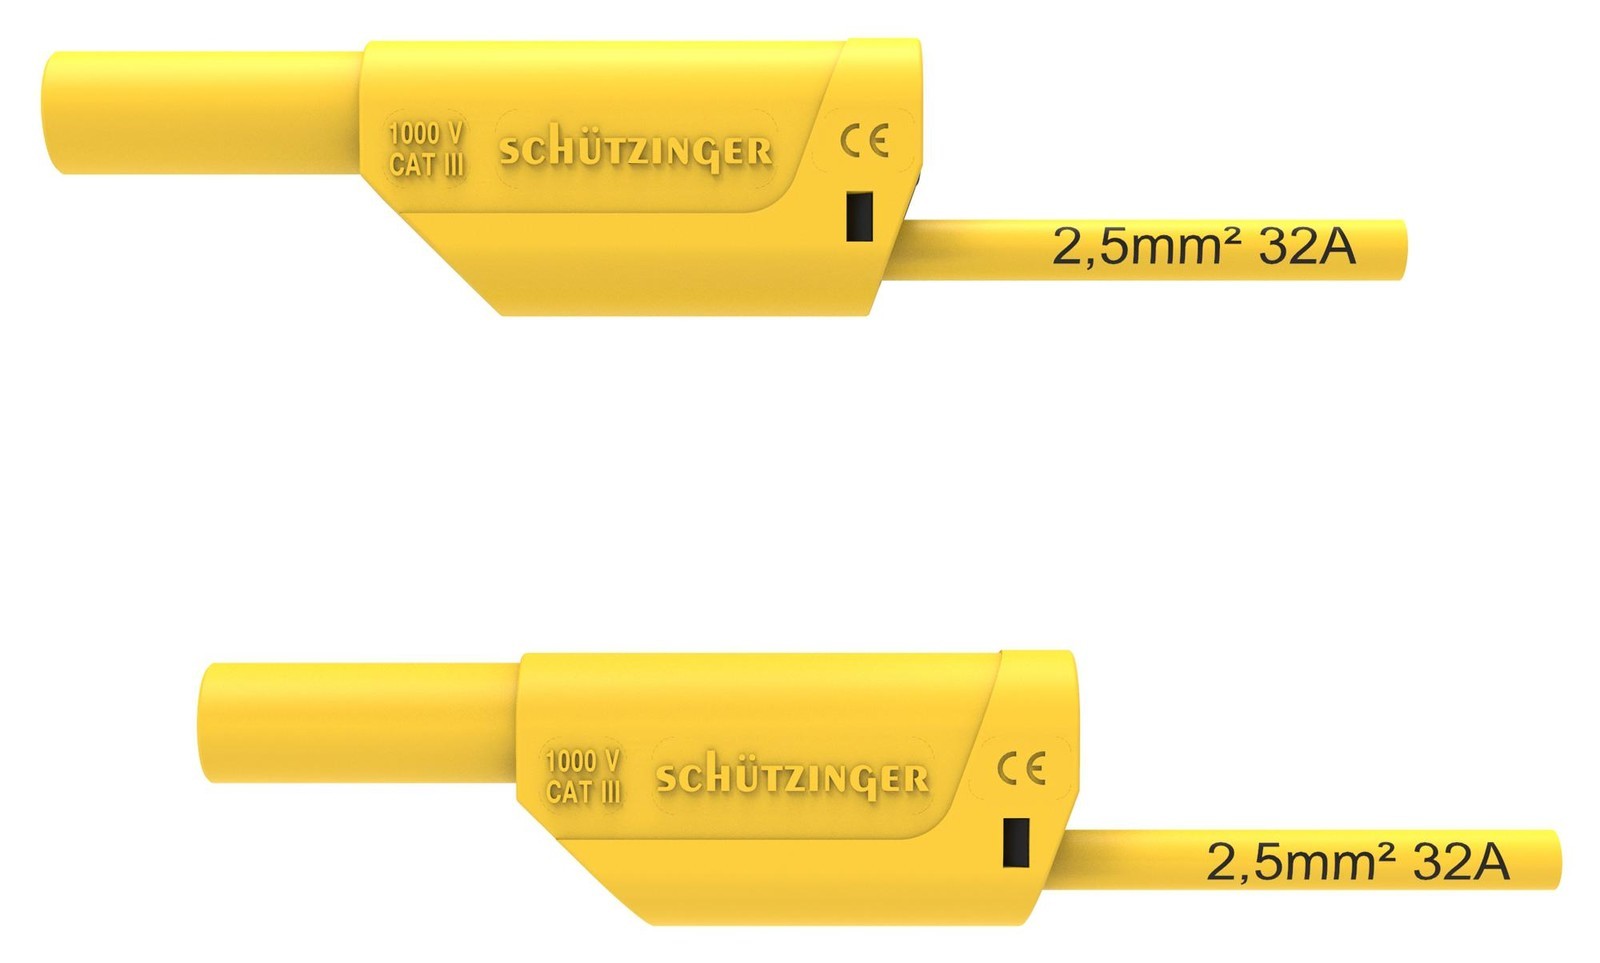 Schutzinger Di Vsfk 8700 / 2.5 / 50 / Ge 4mm Banana Plug-Sq, Shrouded, Y, 500mm